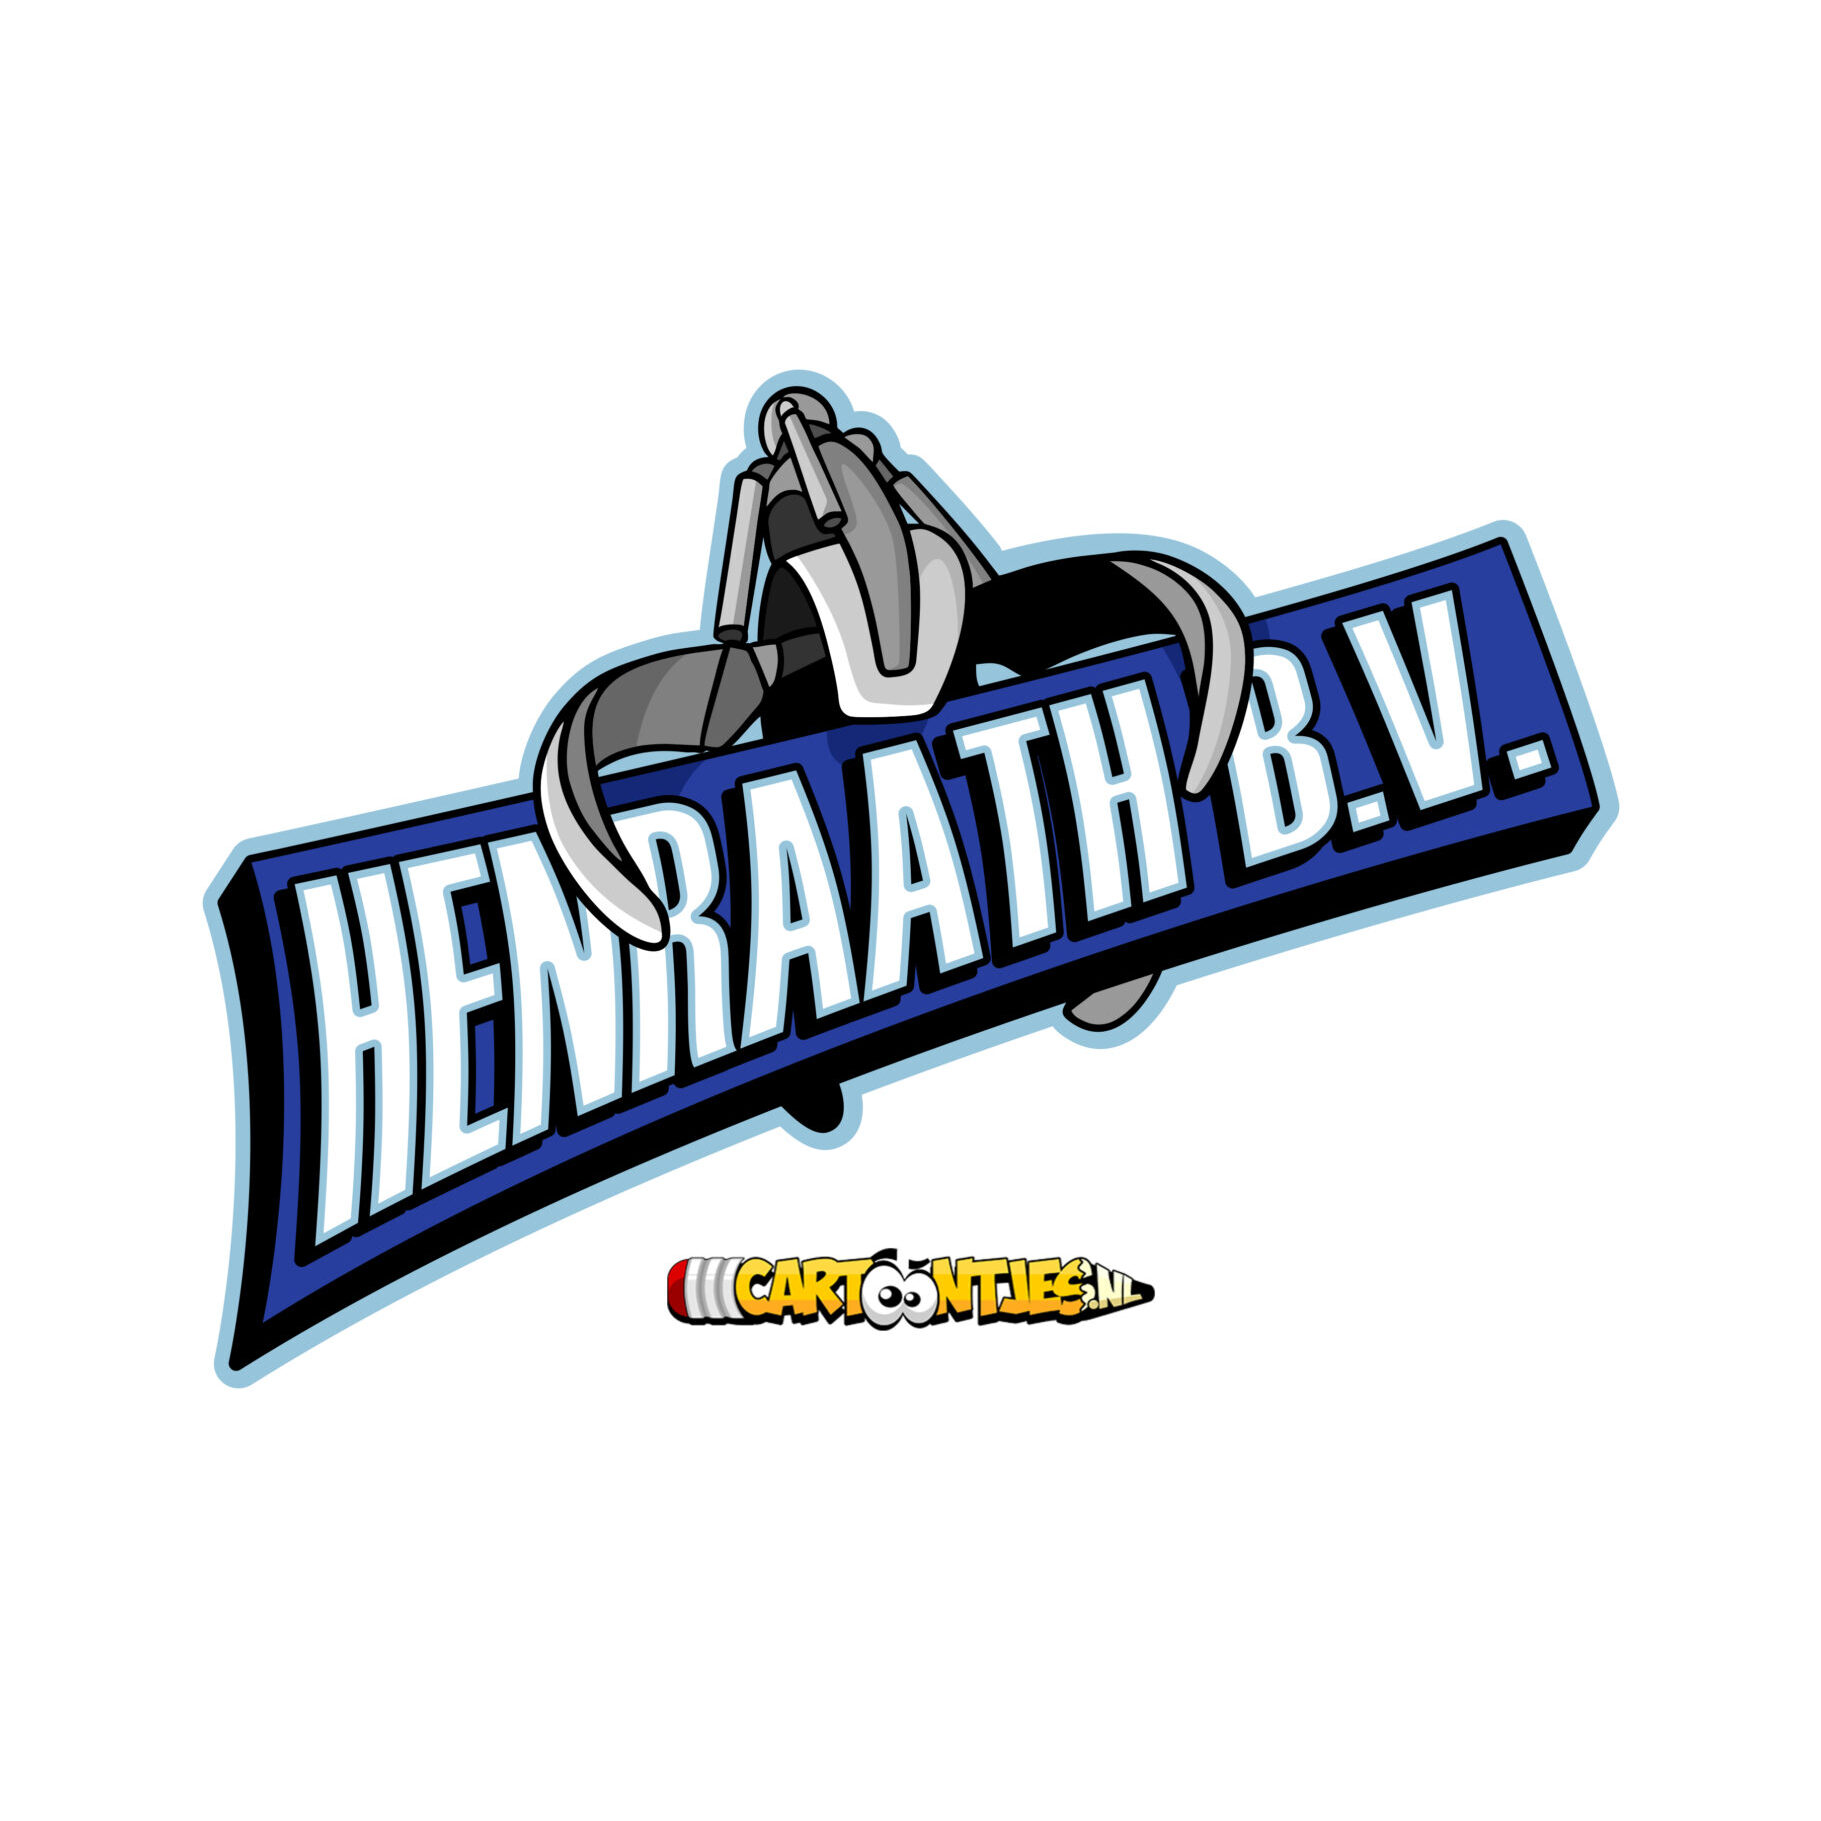 HENRAATH-bv-logo